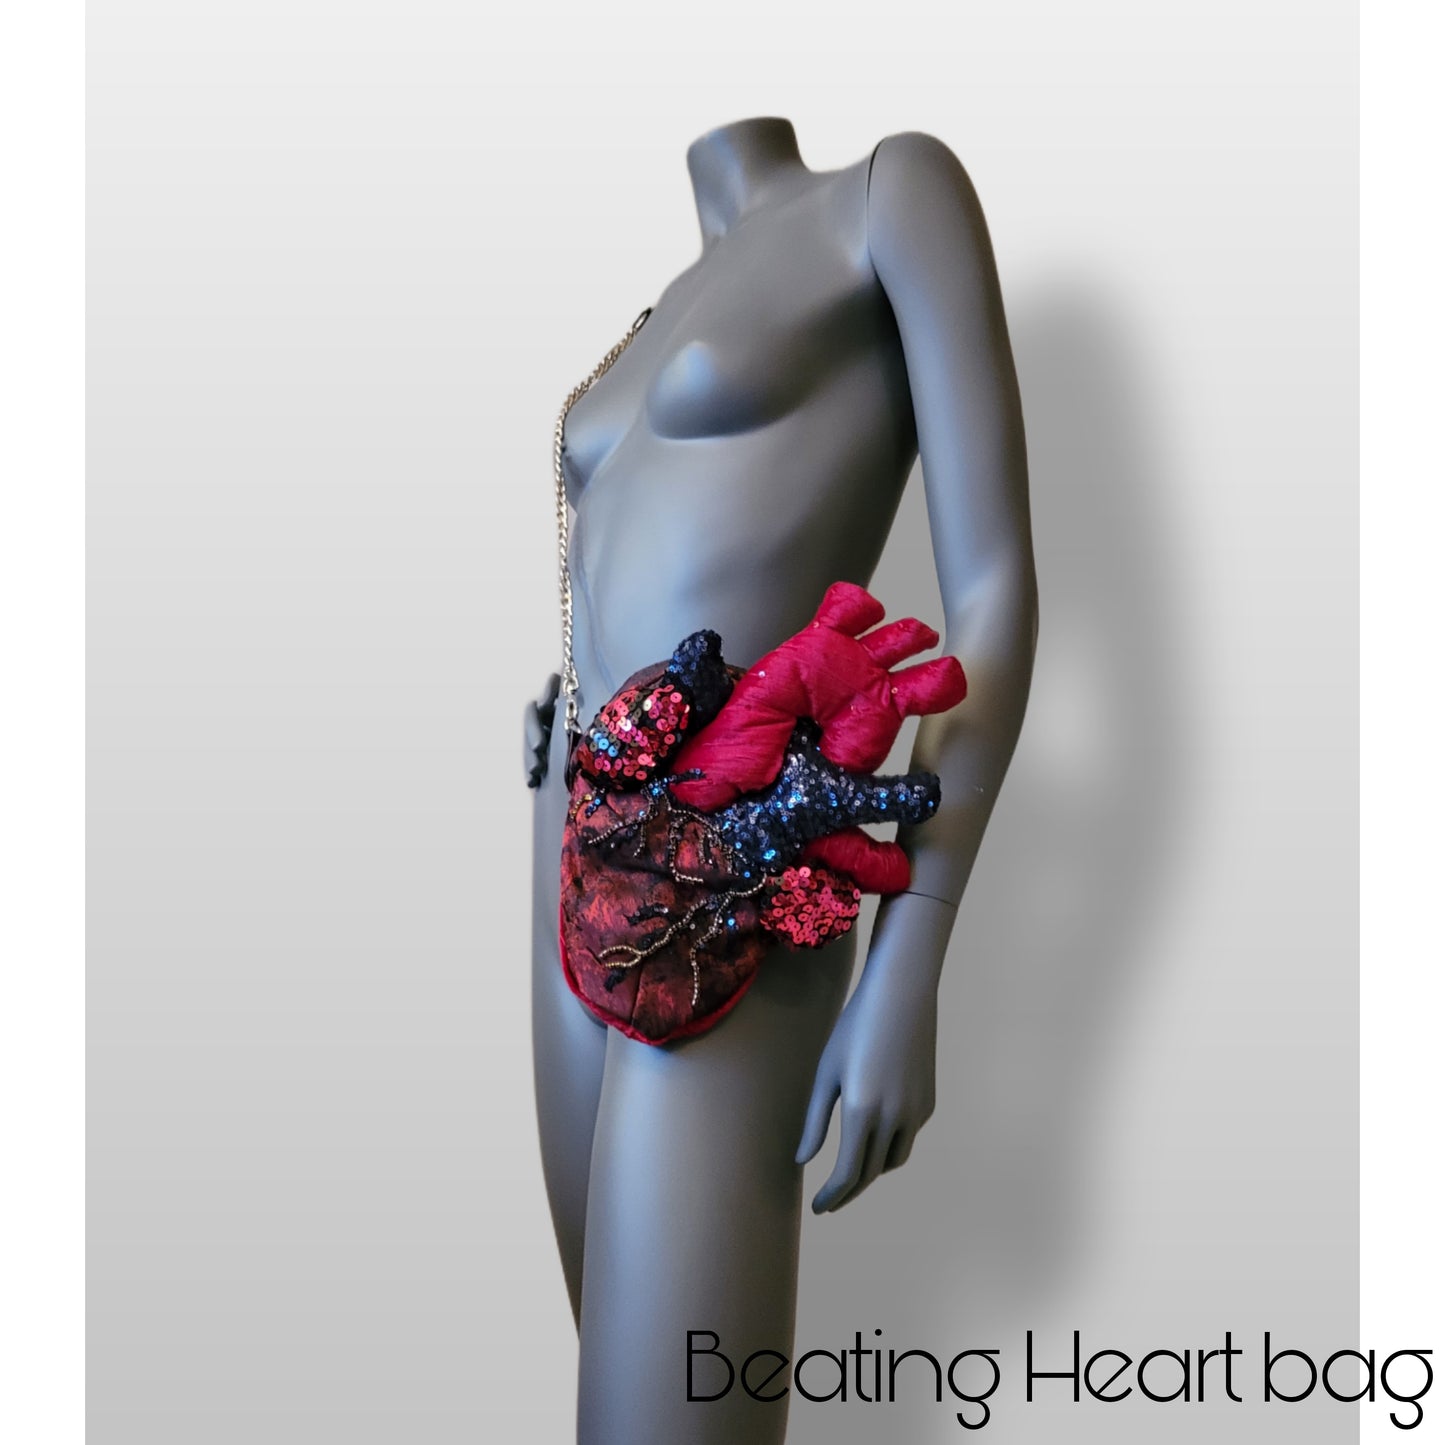 Bespoke couture order: Anatomical heart bag, wearable art purse